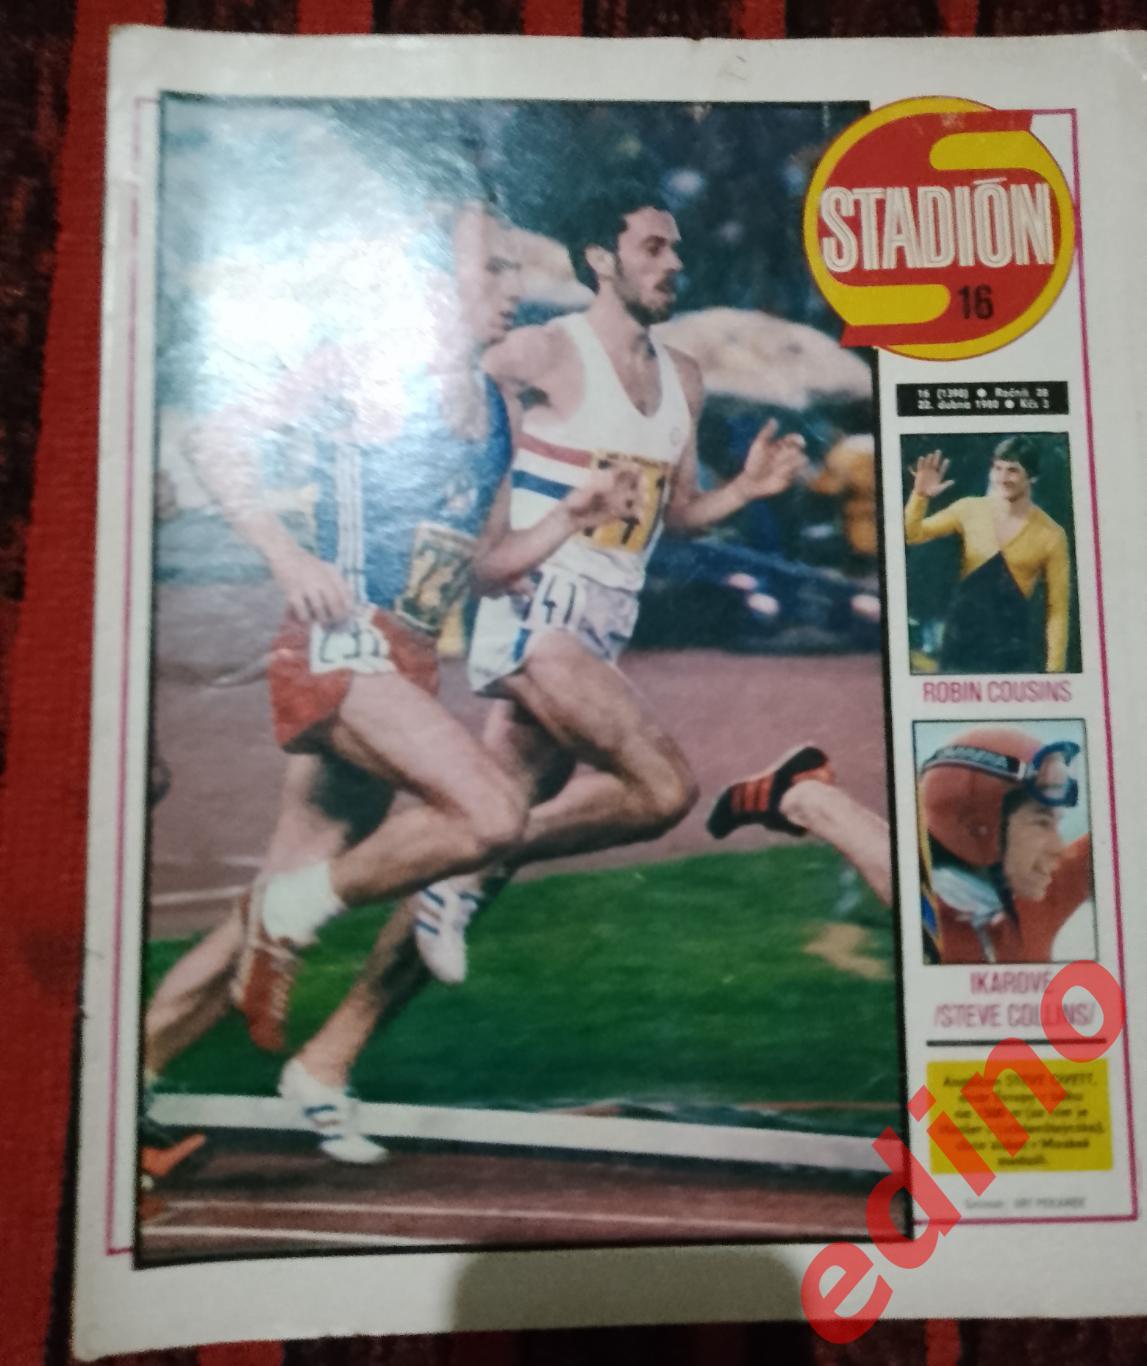 журнал Стадион(stadion) 1980 год Германия участникЕвро 80 1